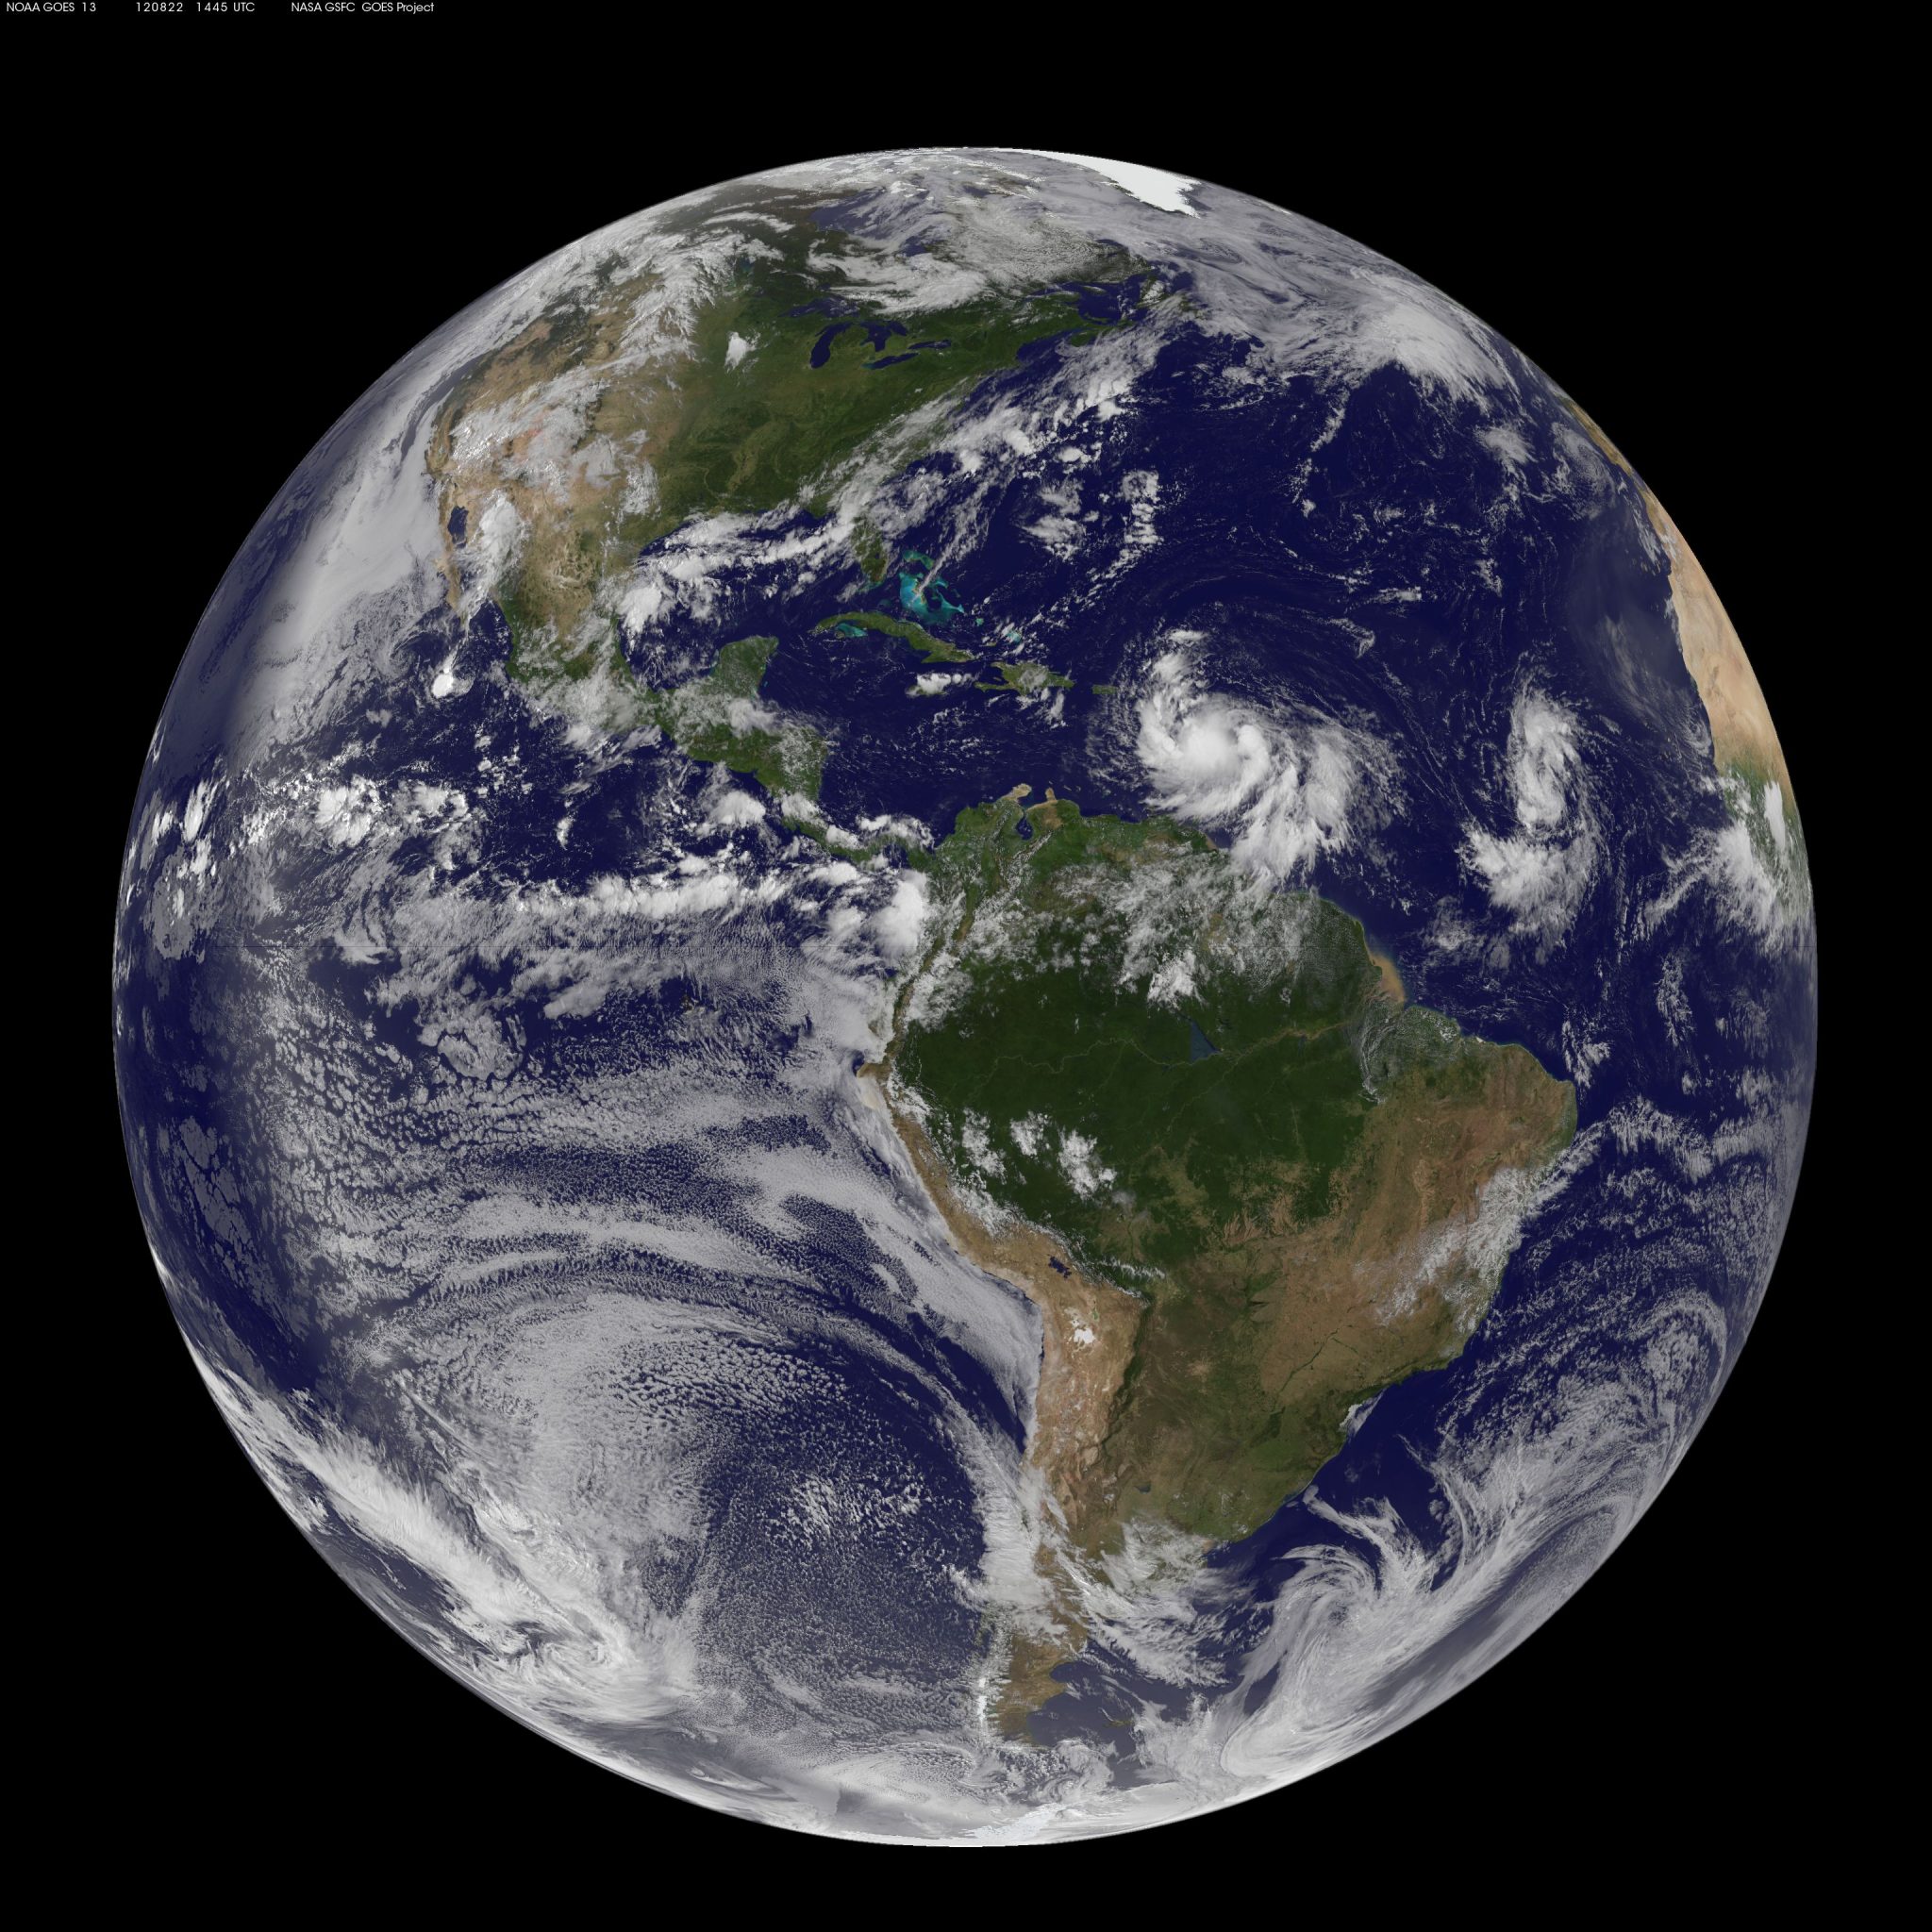 NASA Sees Tropical Storm Isaac and Tropical Depression 10 Racing in Atlantic